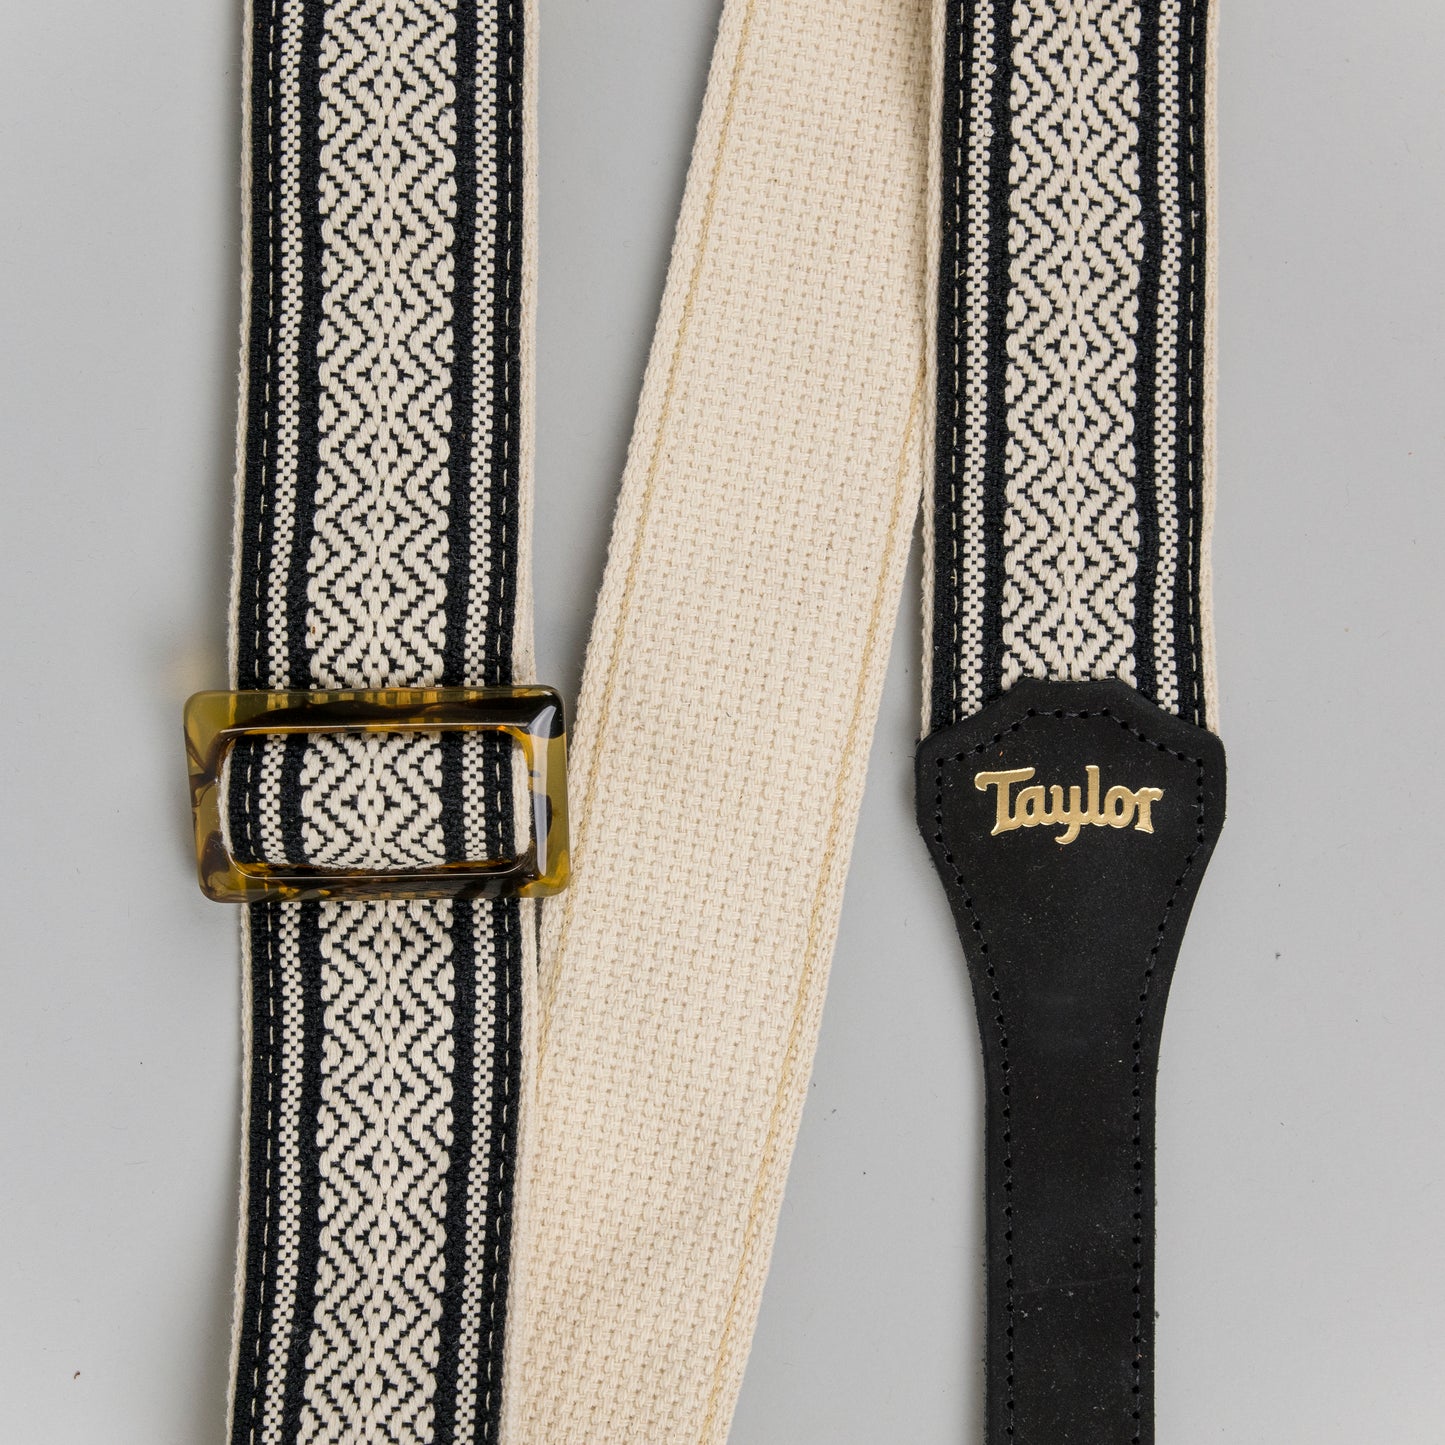 Taylor Academy Series White/Black Jacquard Cotton Guitar Strap, 2"